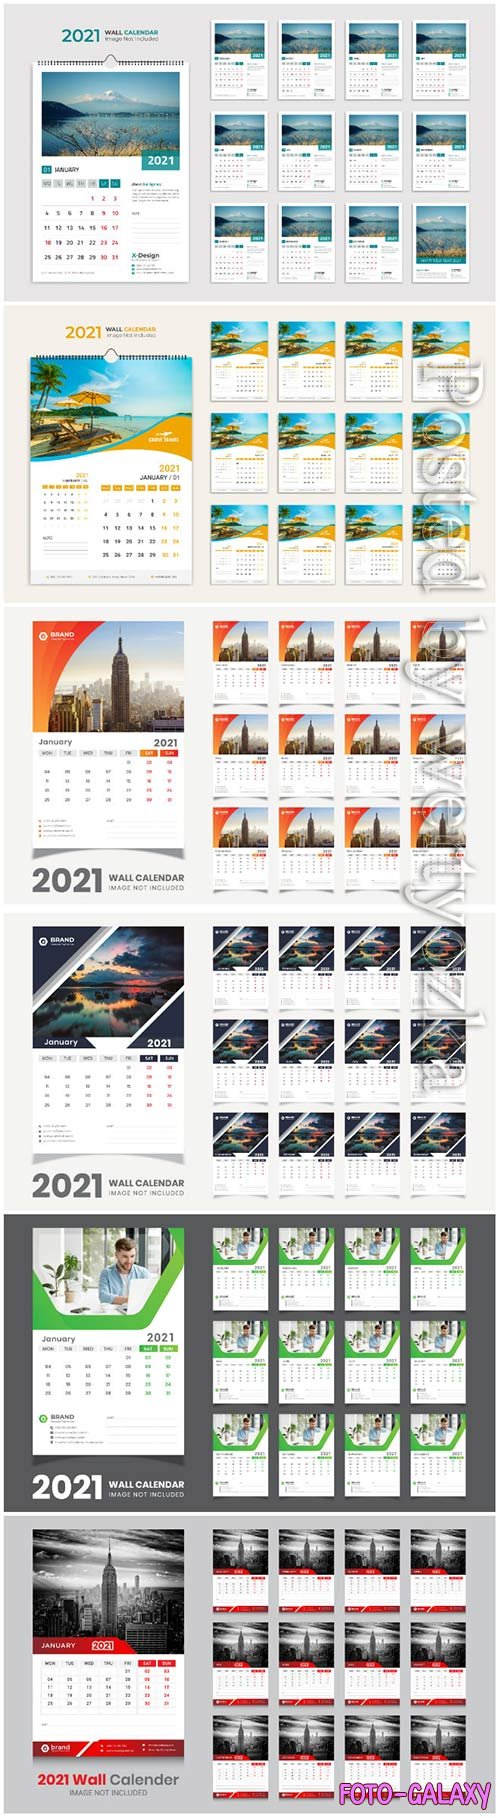 Desk calendar 2021 template design for new year vol 3